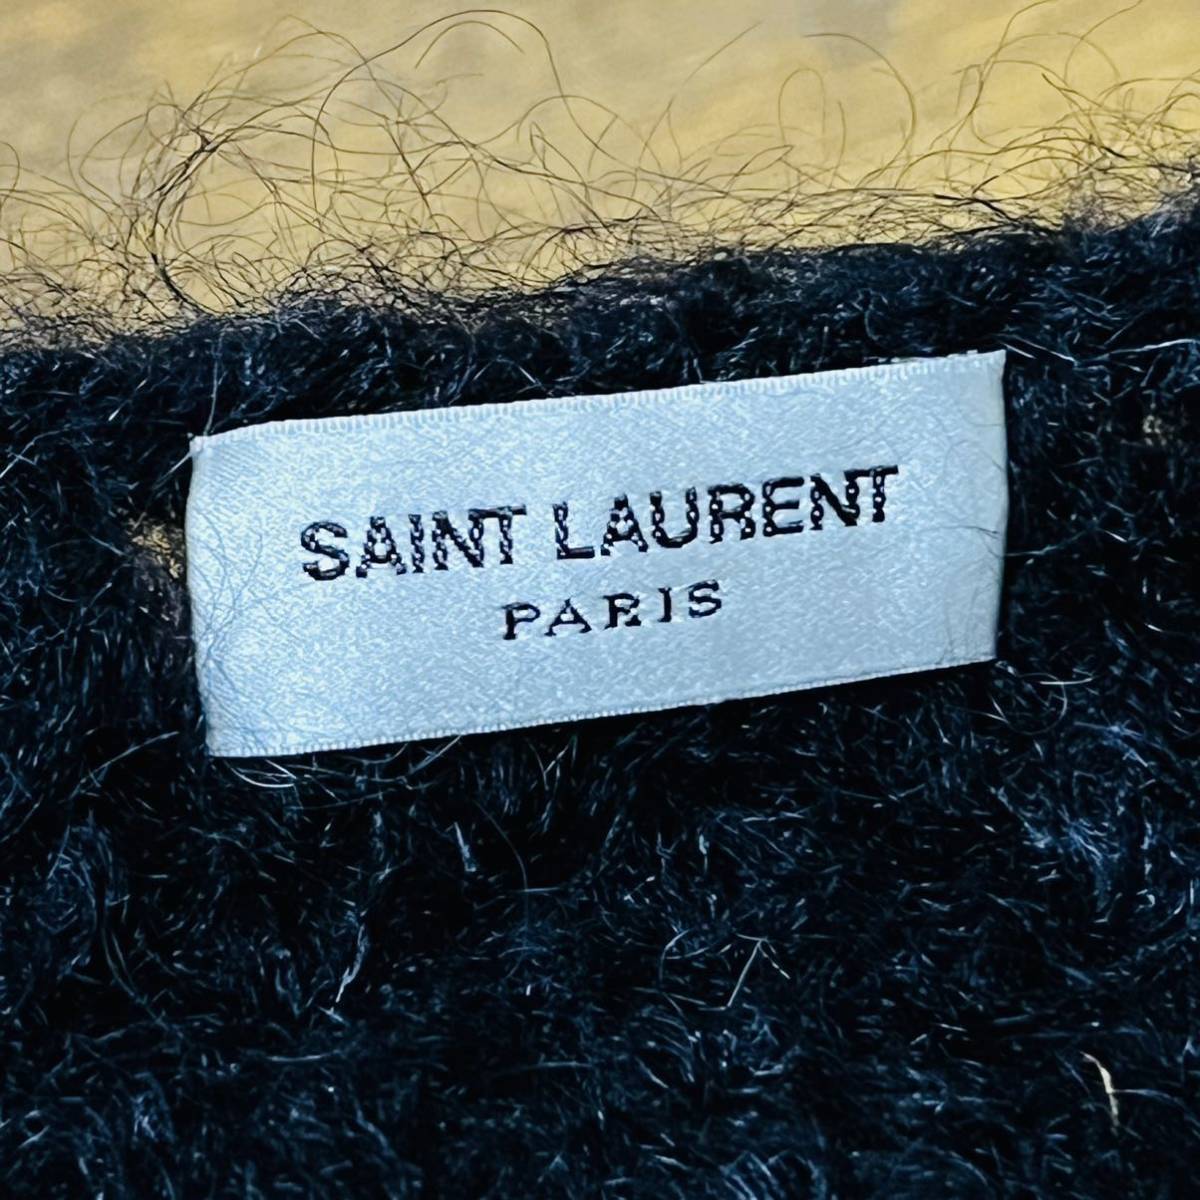 SAINT LAURENT PARIS sun rolan Paris size S Eddie abrasion man 13AW oversize mo hair border knitted white black sweater 